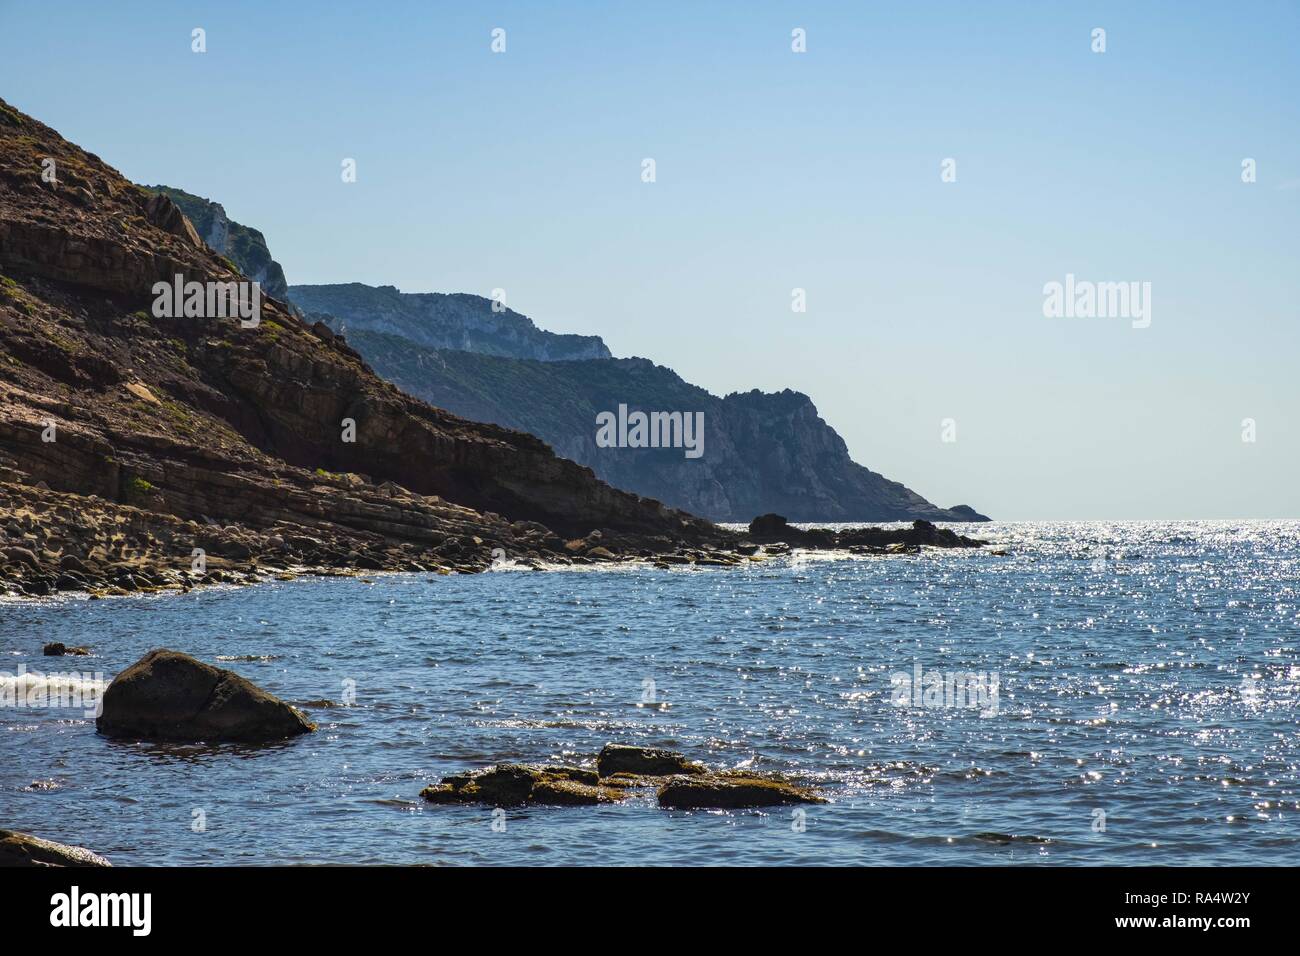 Alghero, Sardinia / Italy - 2018/08/11: Panoramic view of the Cala Porticciolo gulf with cliffs over the Cala Viola gulf in the Porto Conte Regional Park Stock Photo